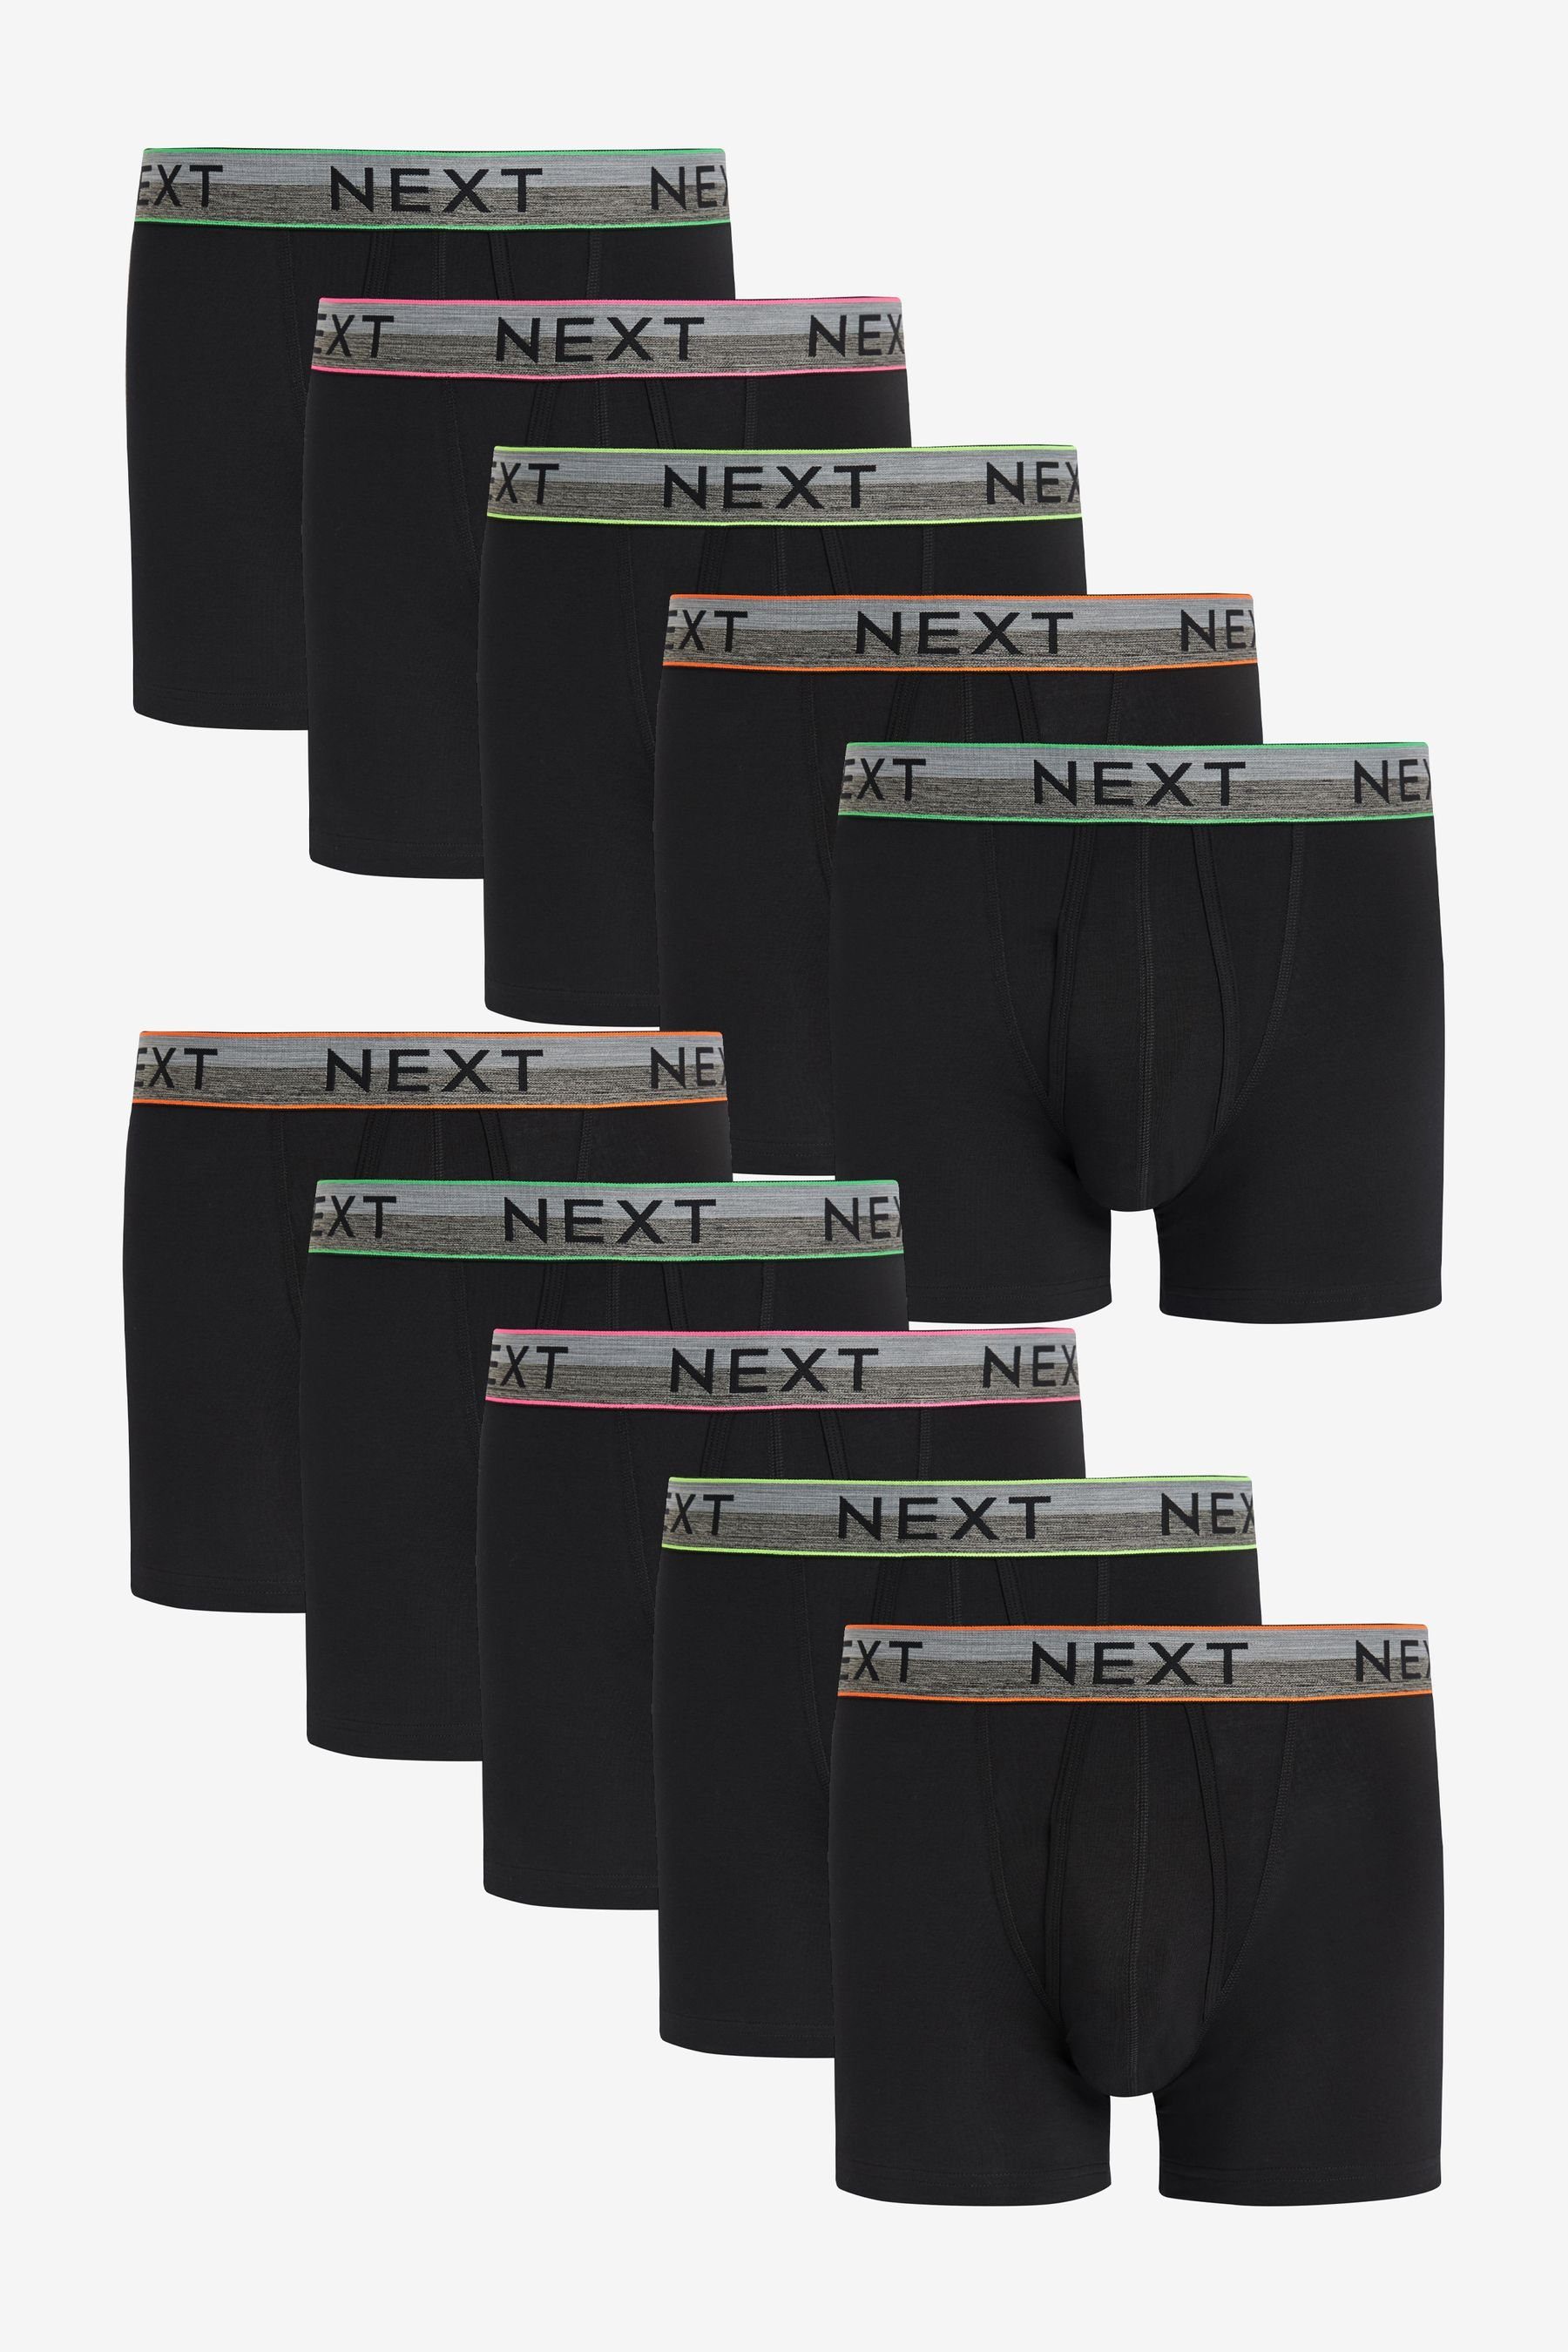 Next Boxershorts Boxershorts A-Front, 10er-Pack (10-St) Black Marl Neon Waistband